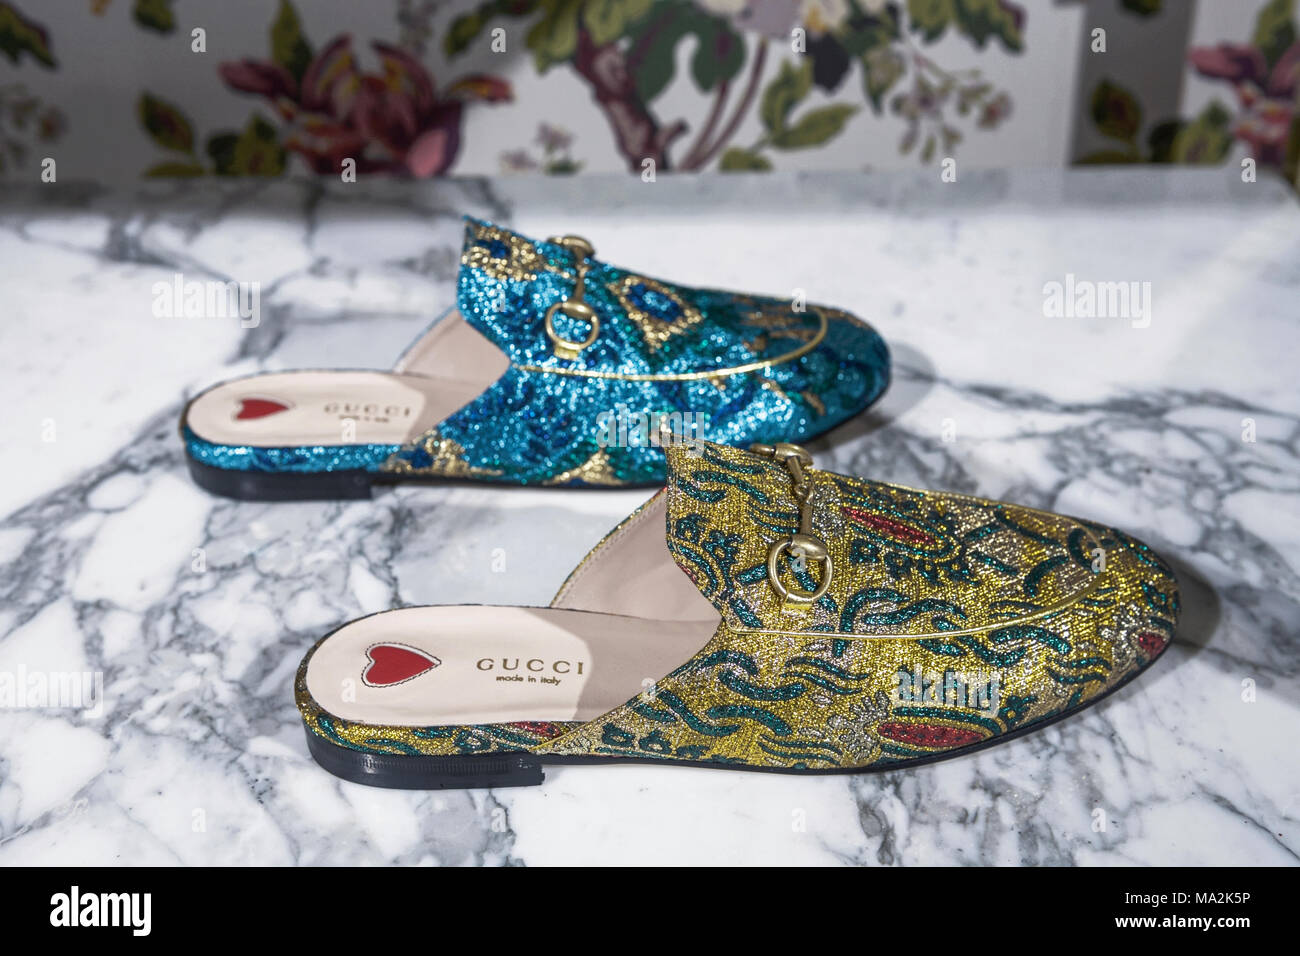 Gucci scarpe. Donna calzature di lusso Foto stock - Alamy